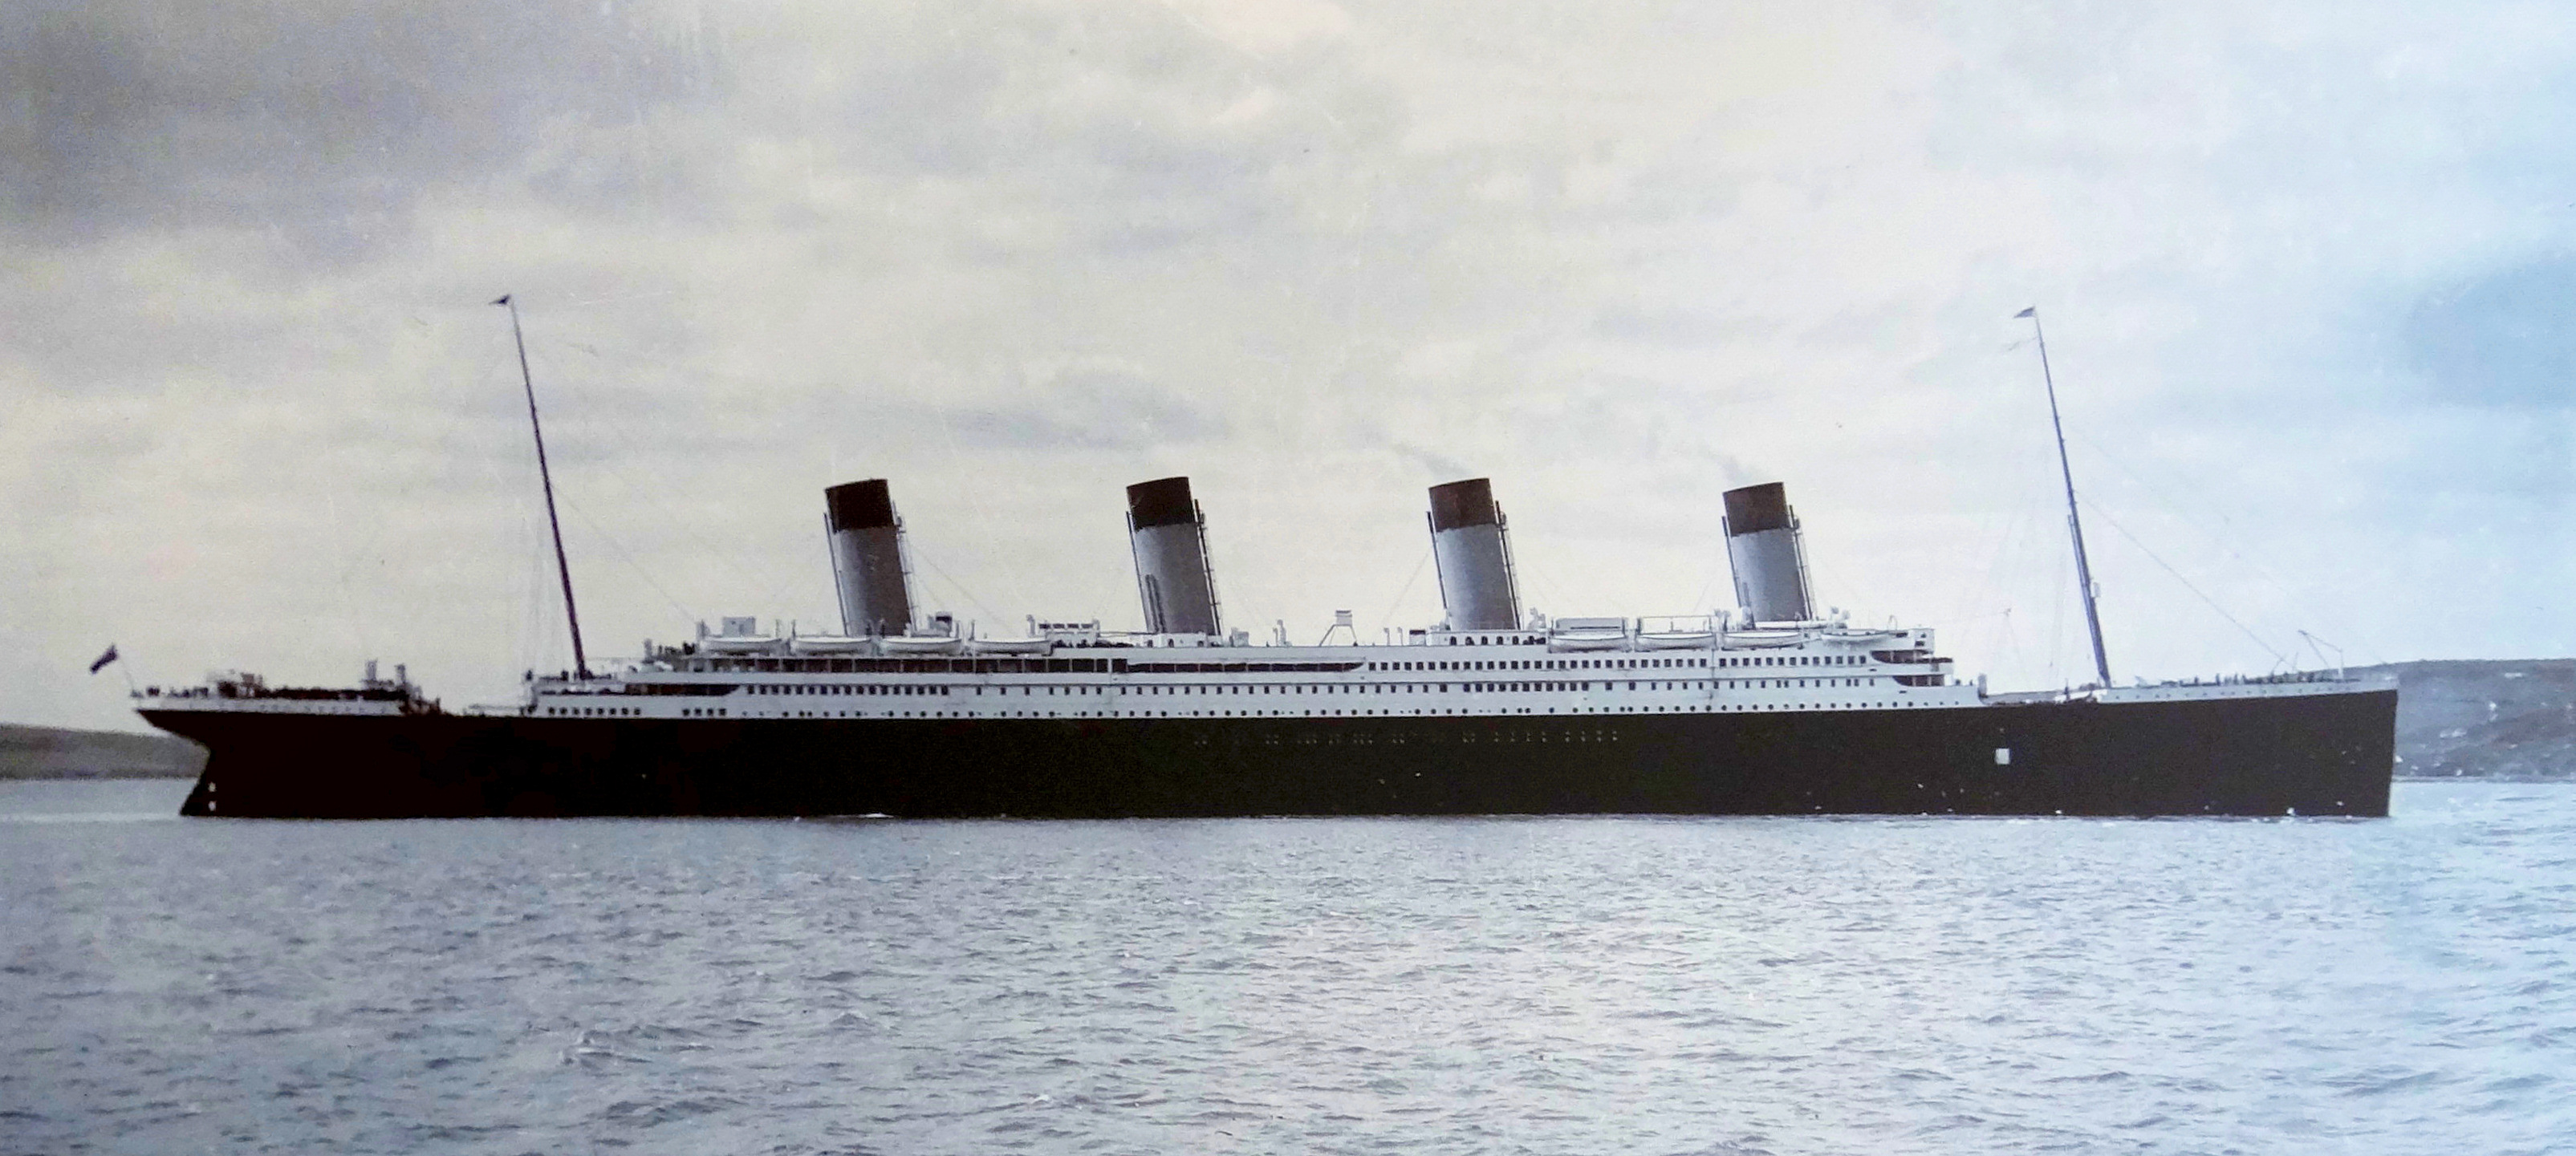 Rms Titanic #20